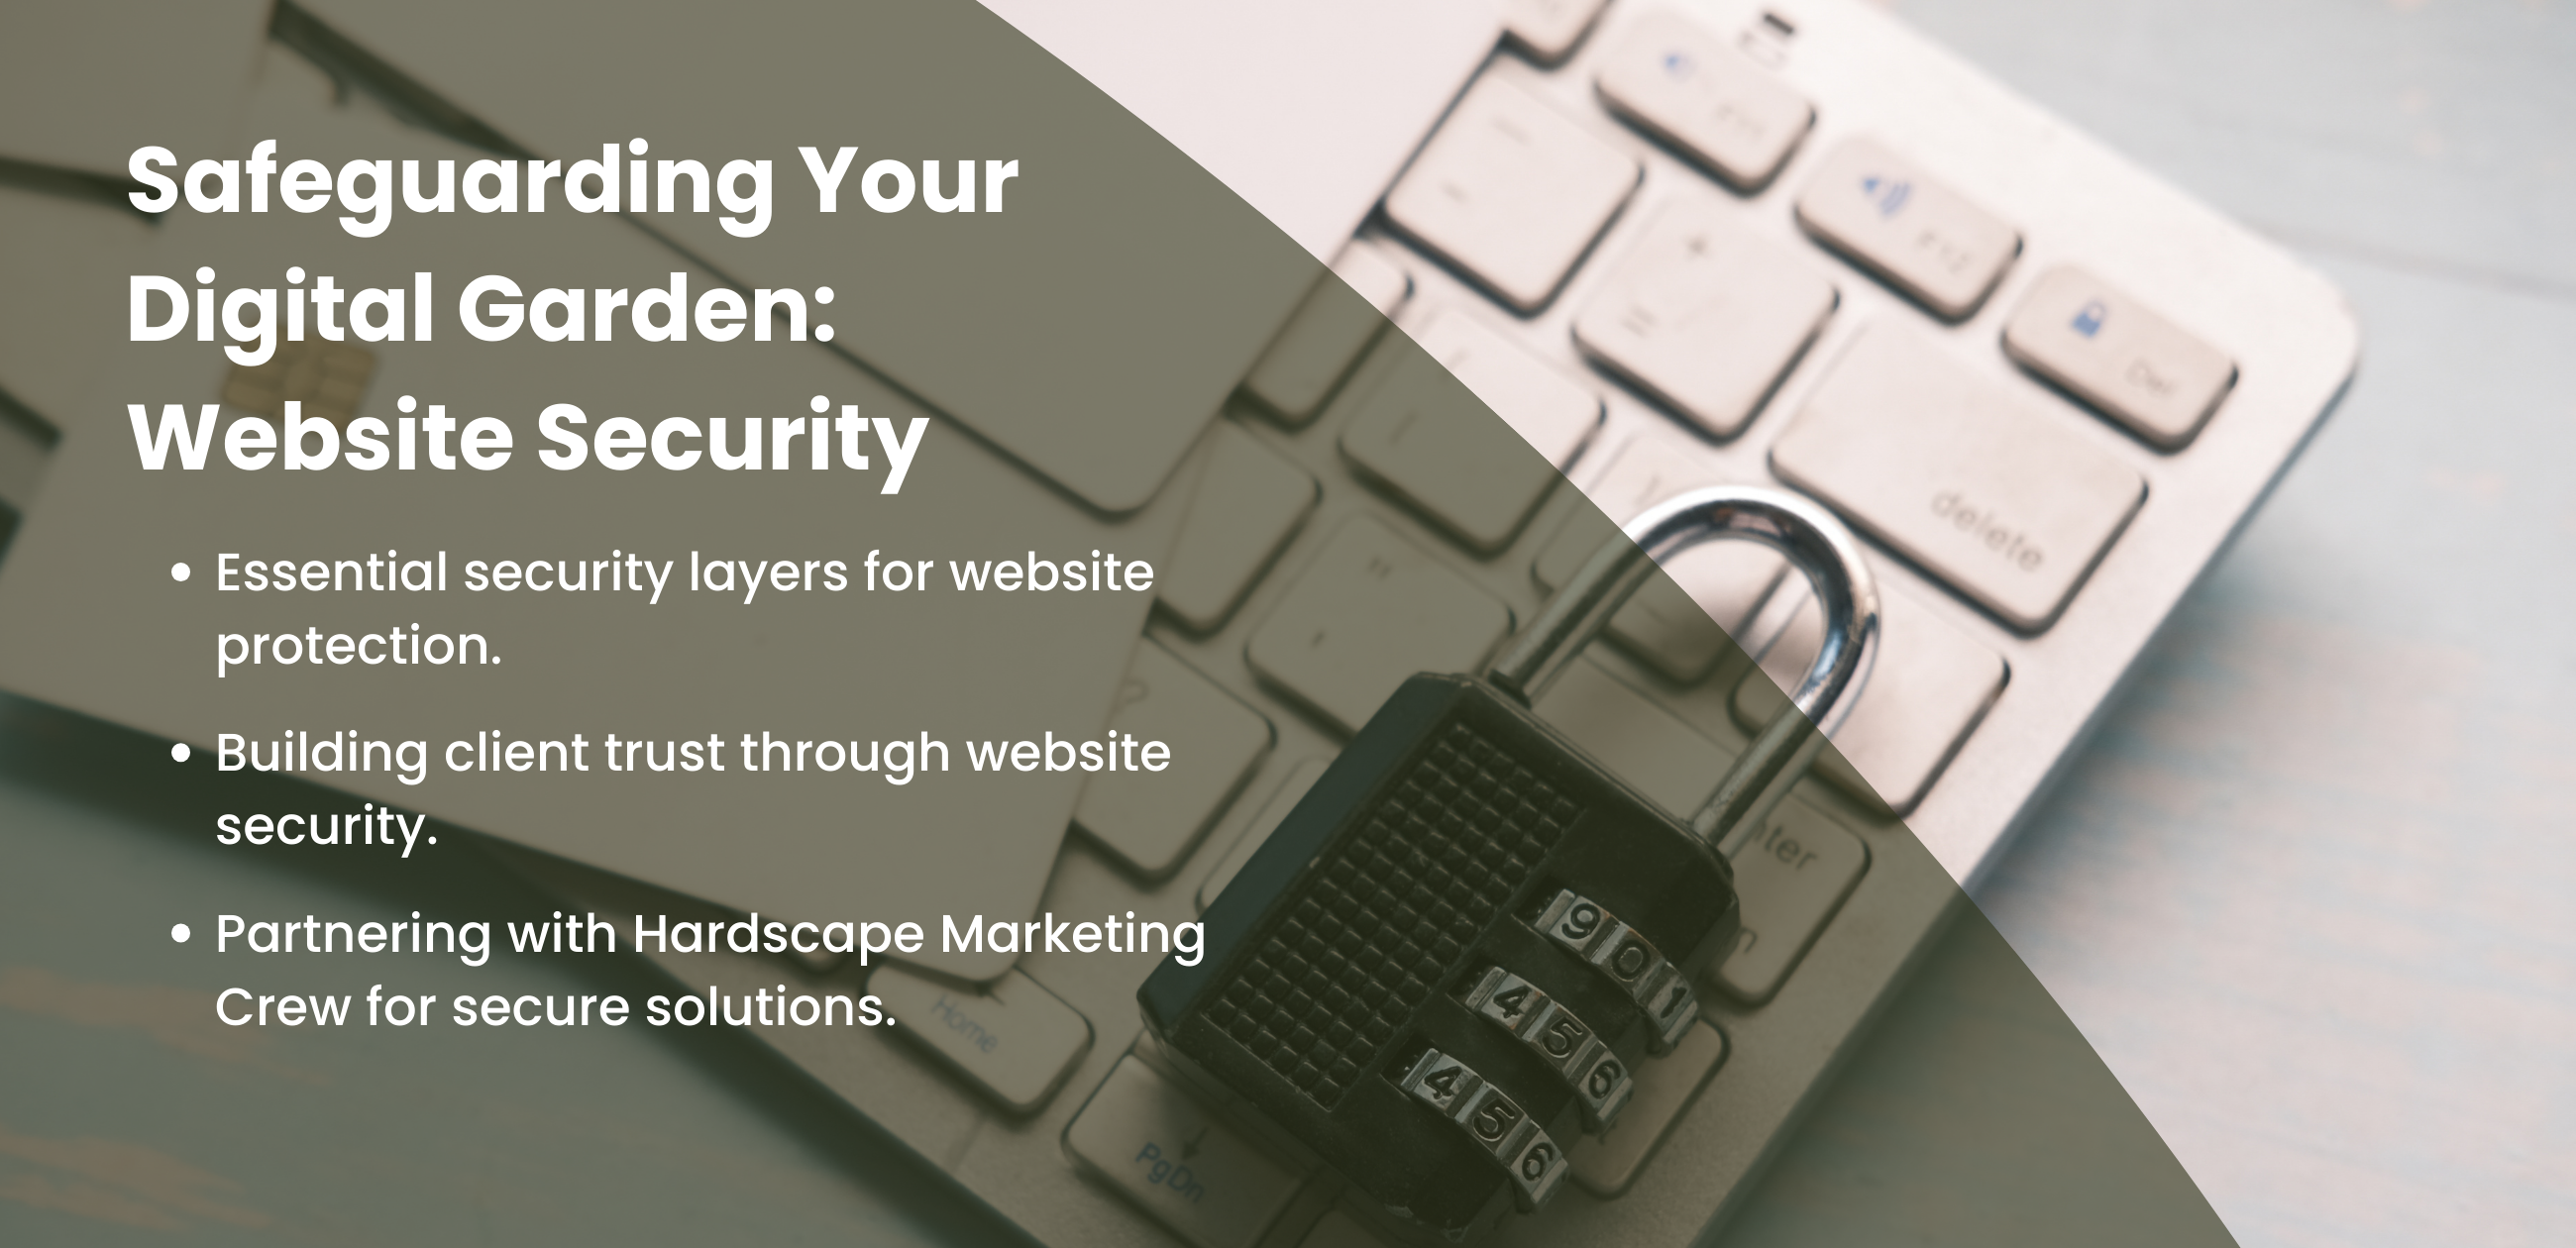 Safeguarding Your Digital Garden: Website Security